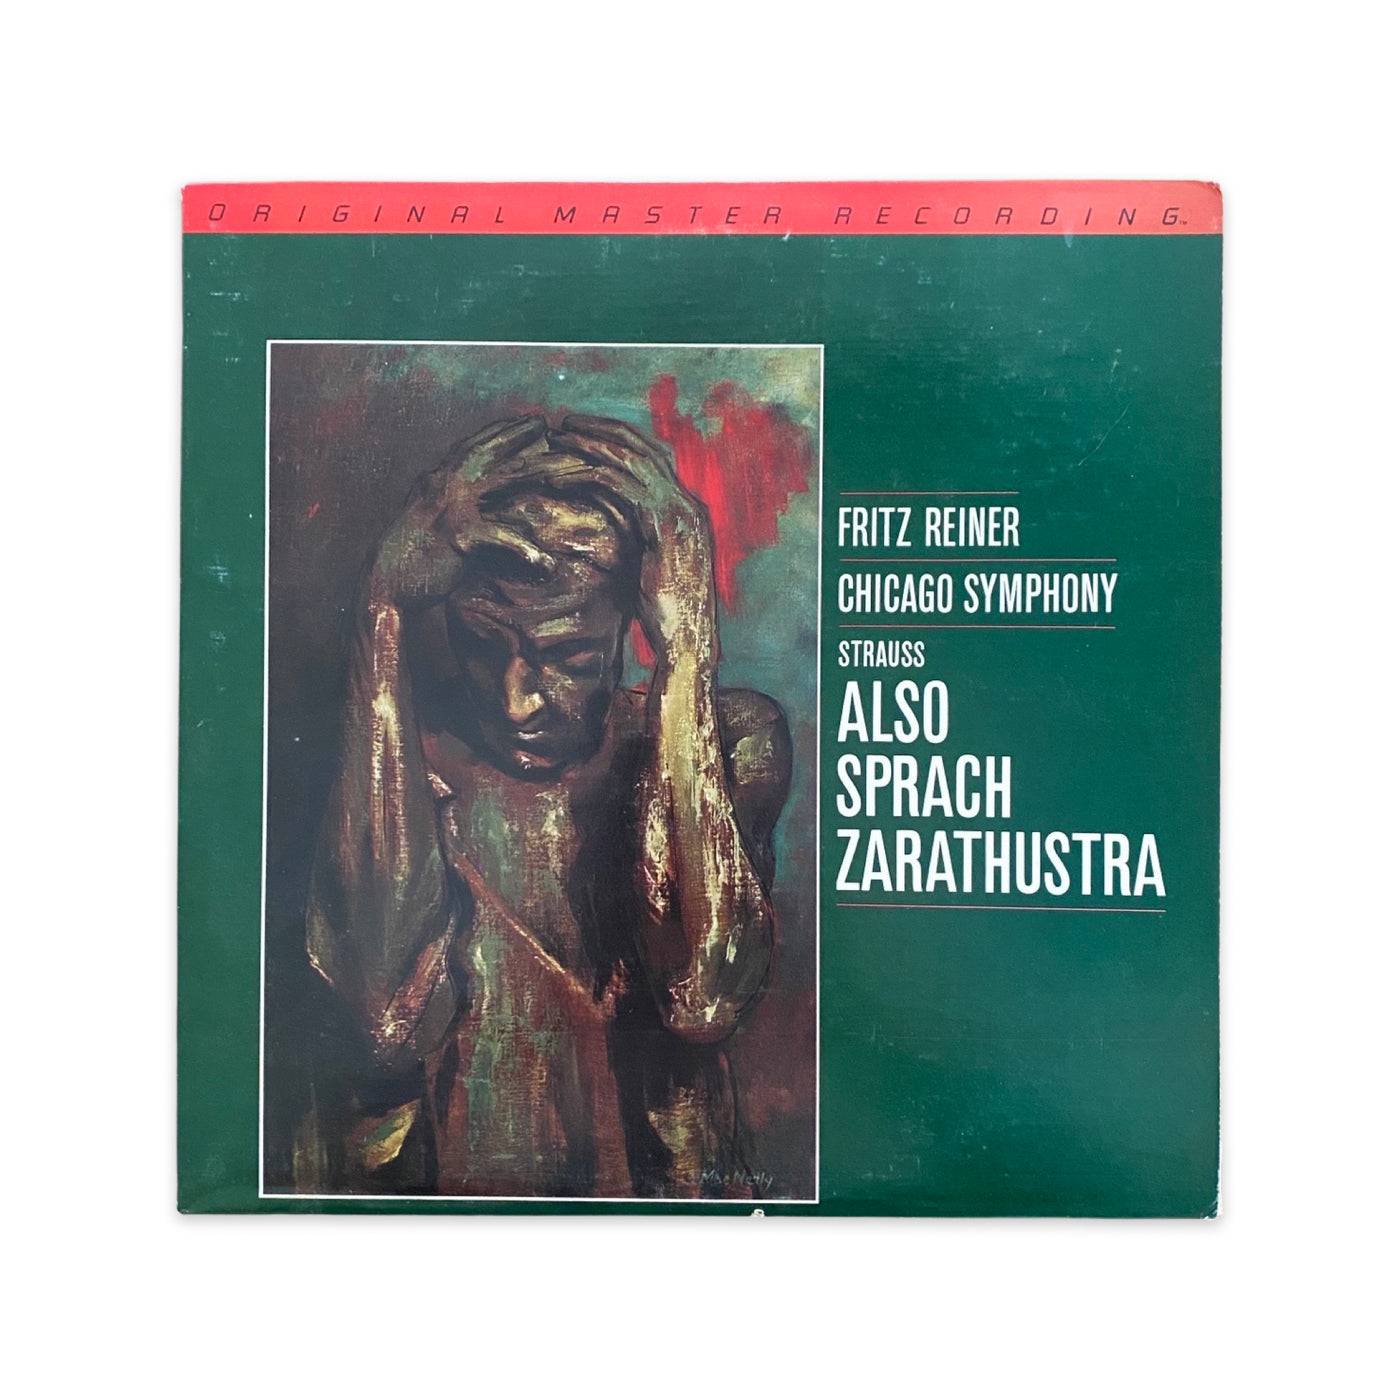 Fritz Reiner, The Chicago Symphony Orchestra, Richard Strauss - Also Sprach Zarathustra (MOFI)